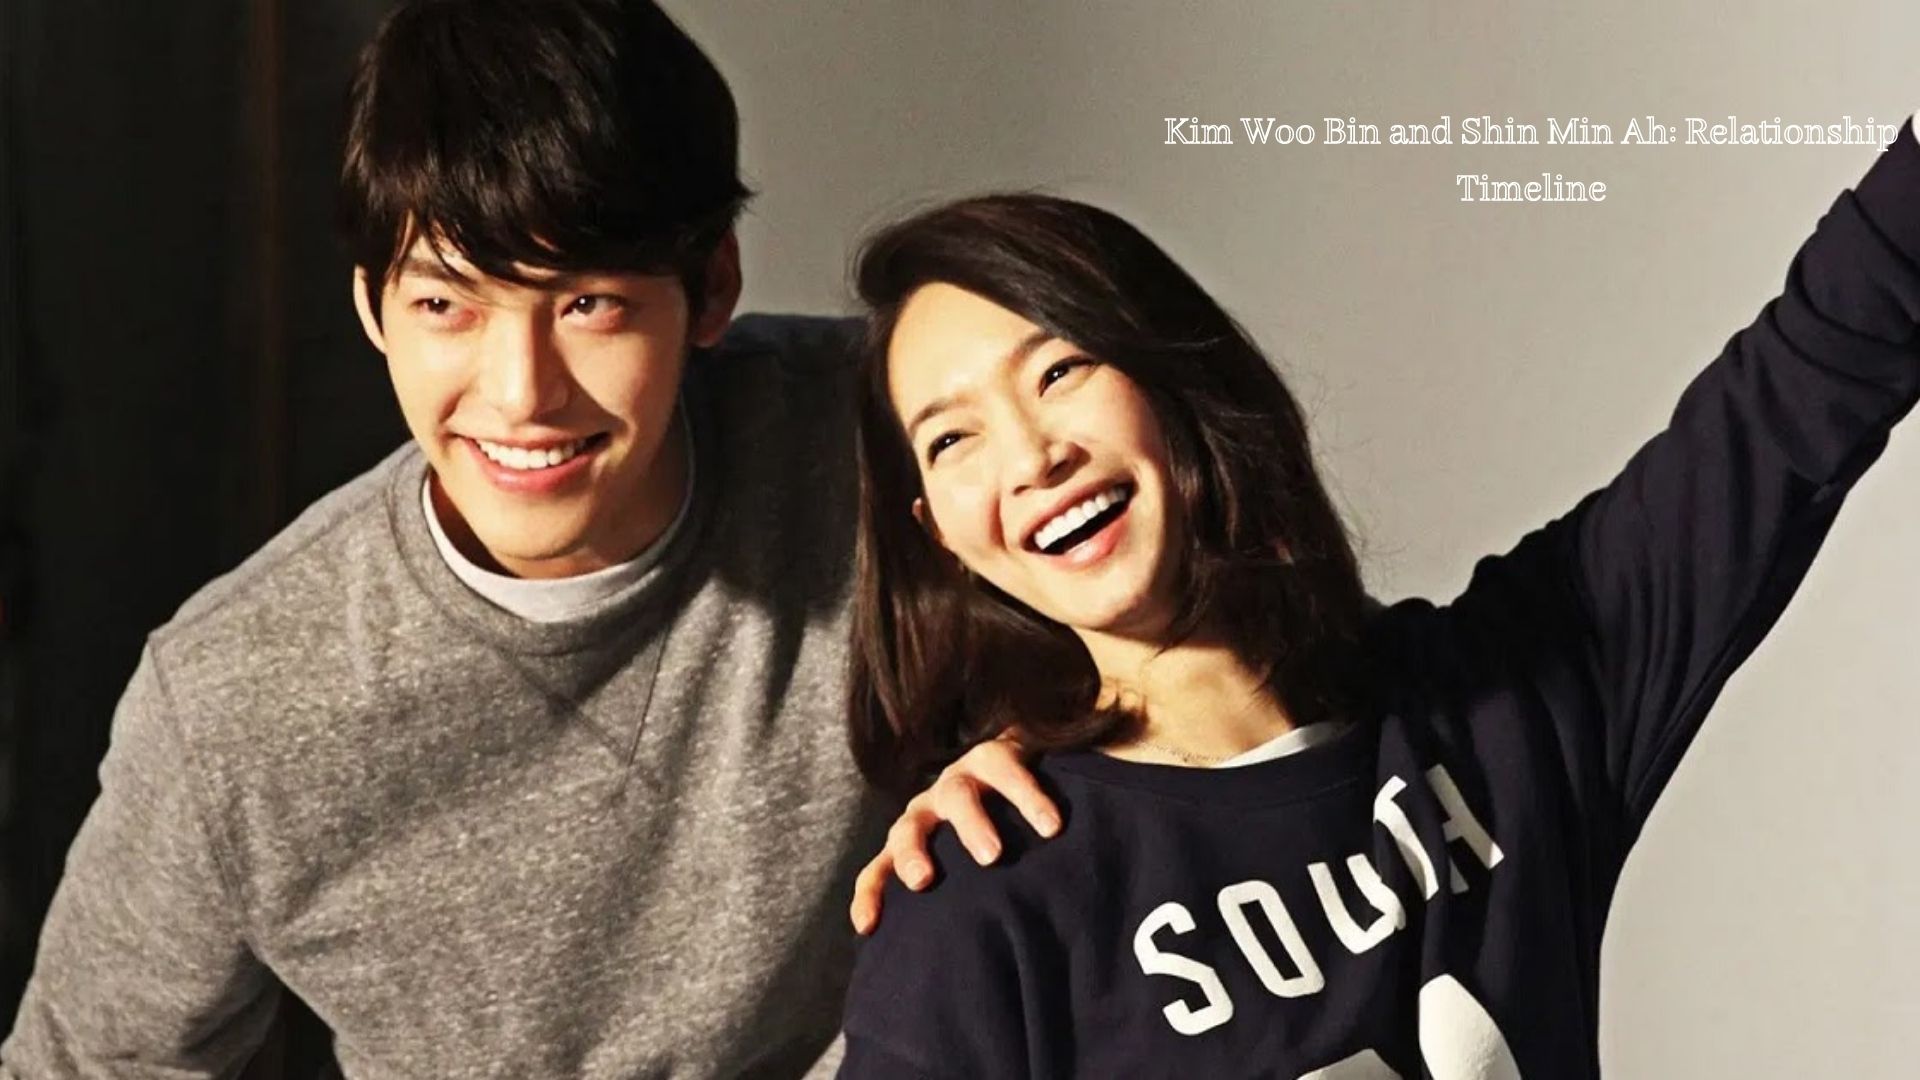 Shin Min Ah and Kim Woo Bin: Know Their Relationship Timeline